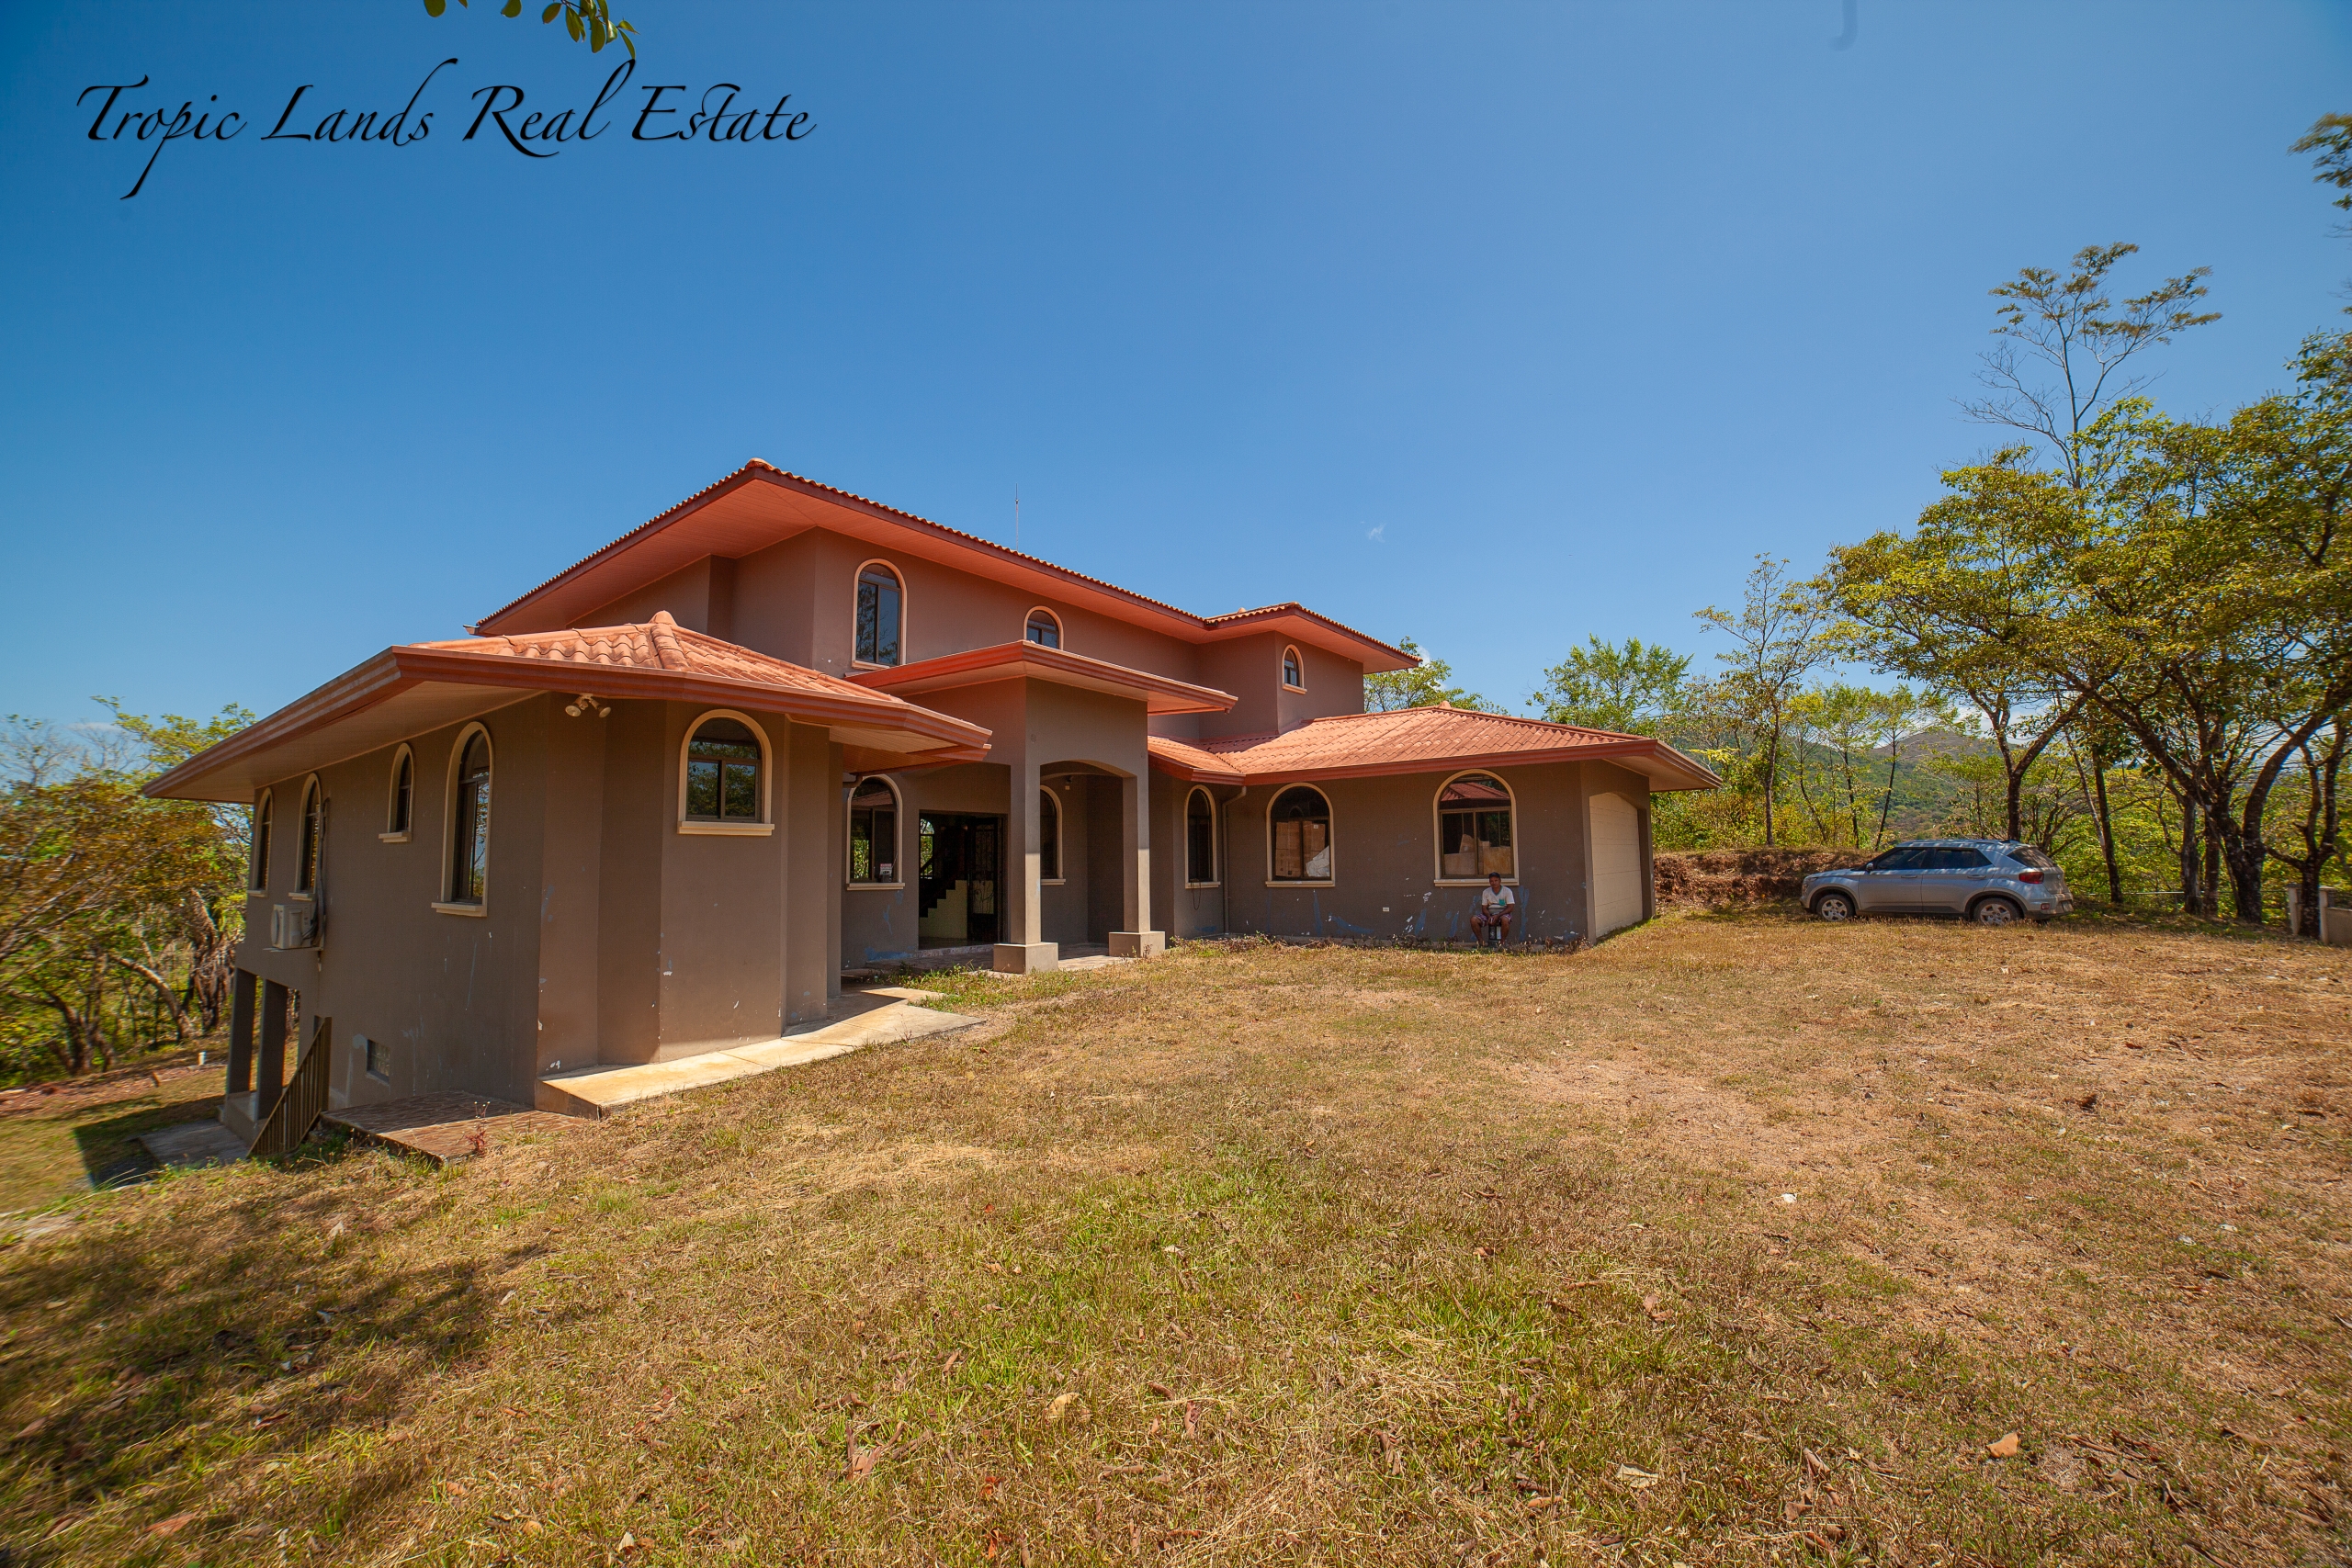 ocean view mountain home for sale in Mariato veraguas Panama real estate